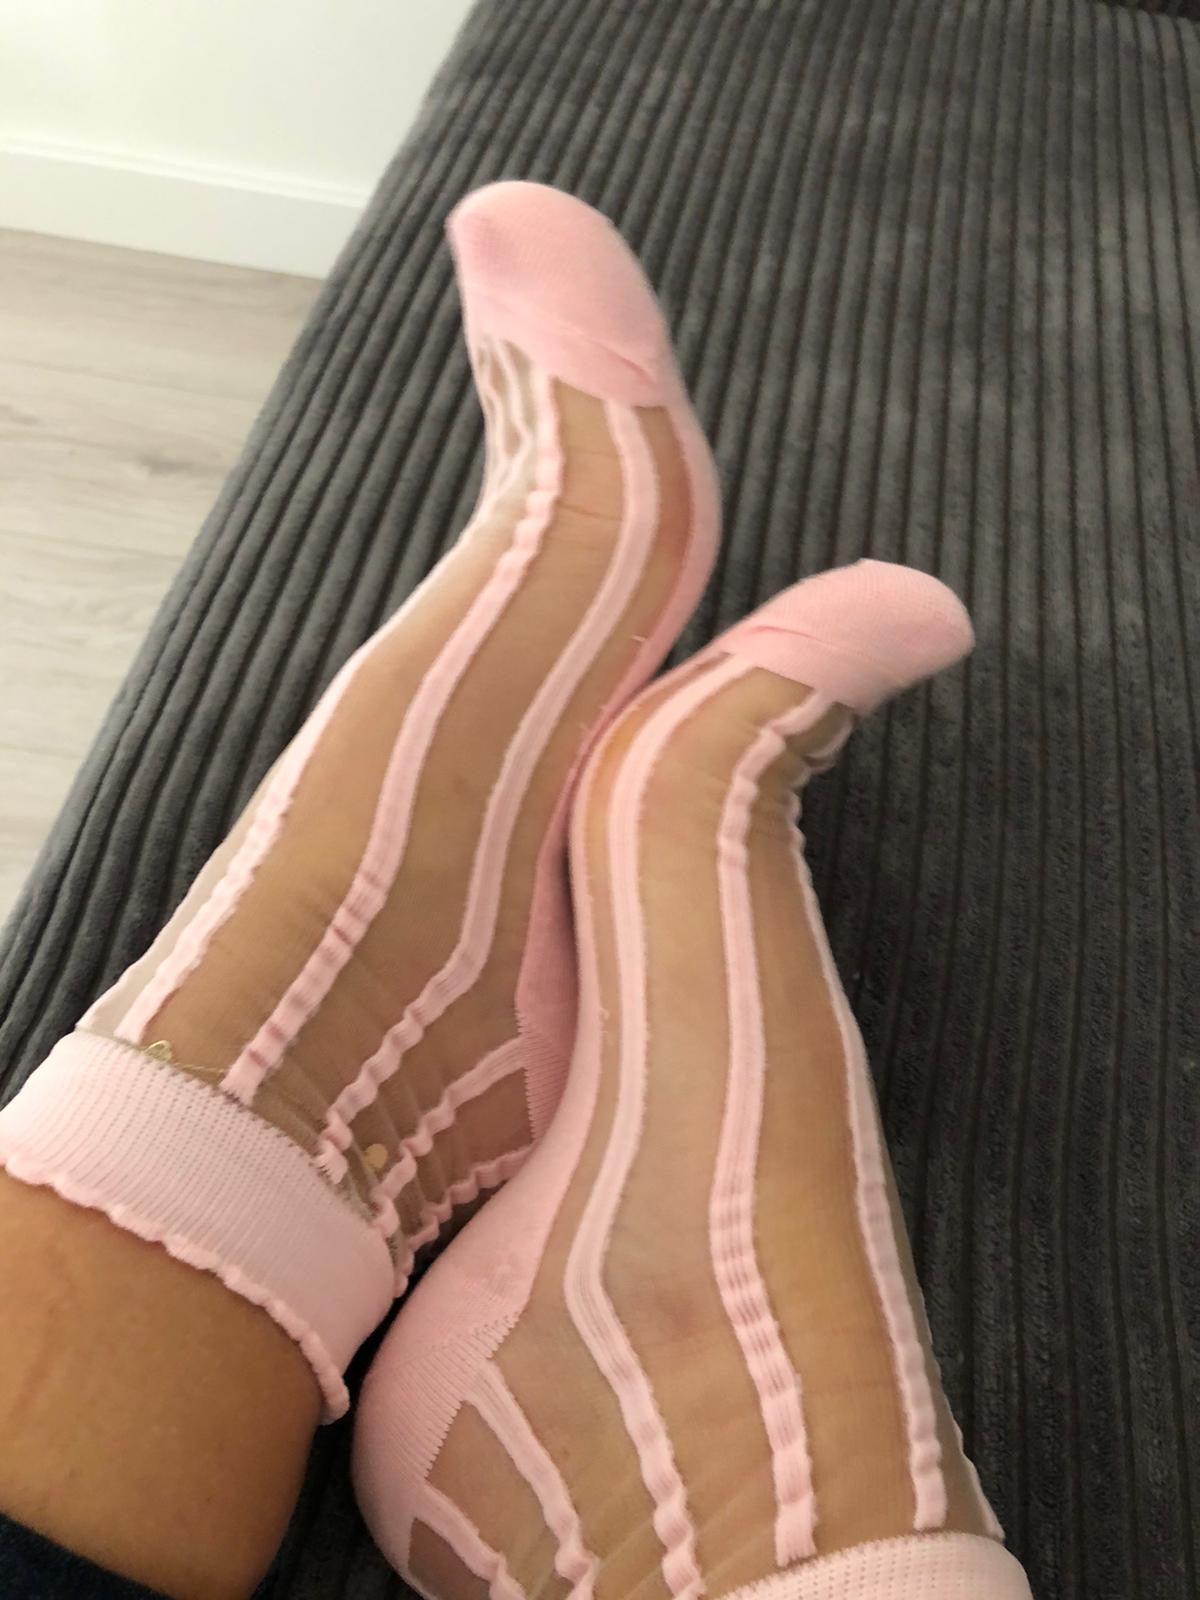 Sharp Pink Striped Sheer Socks - Global Trendz Fashion®